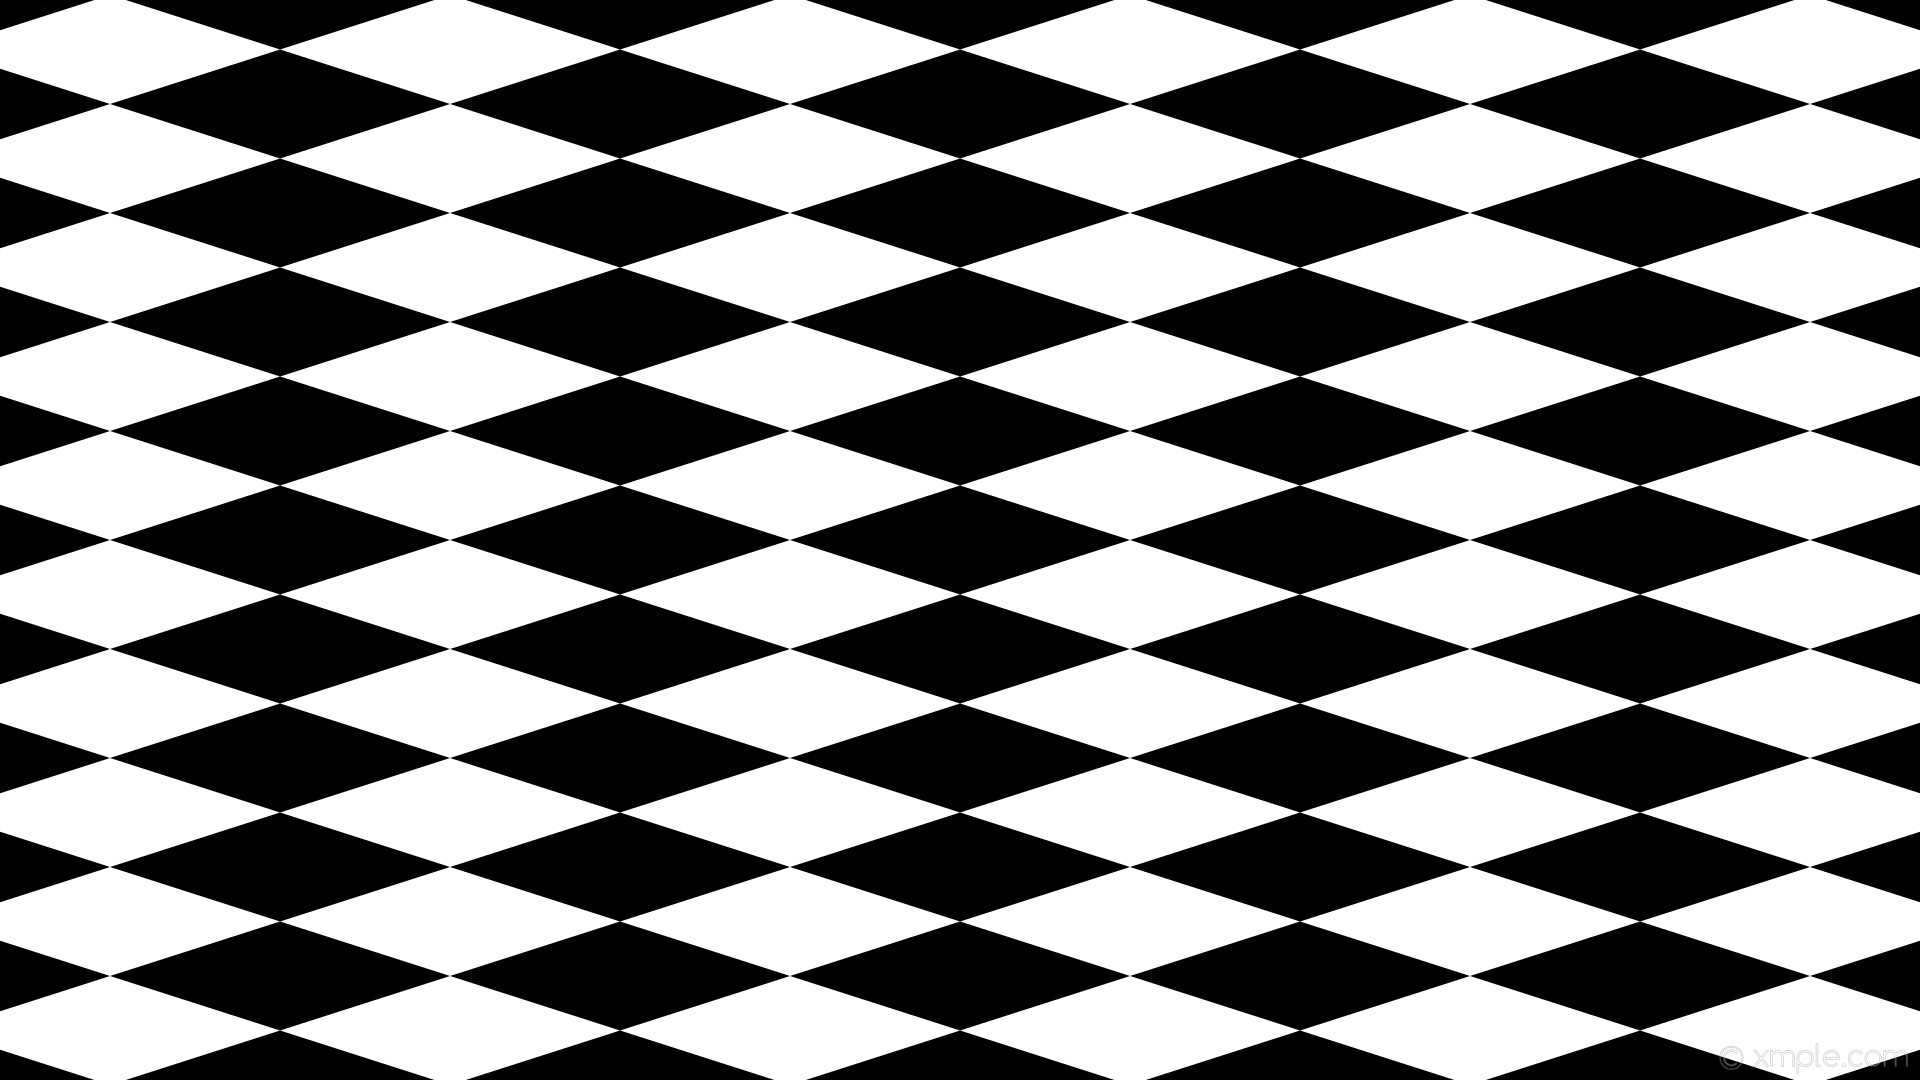 1920x1080 wallpaper rhombus lozenge black white diamond #000000 #ffffff 0Â° 340px 109px